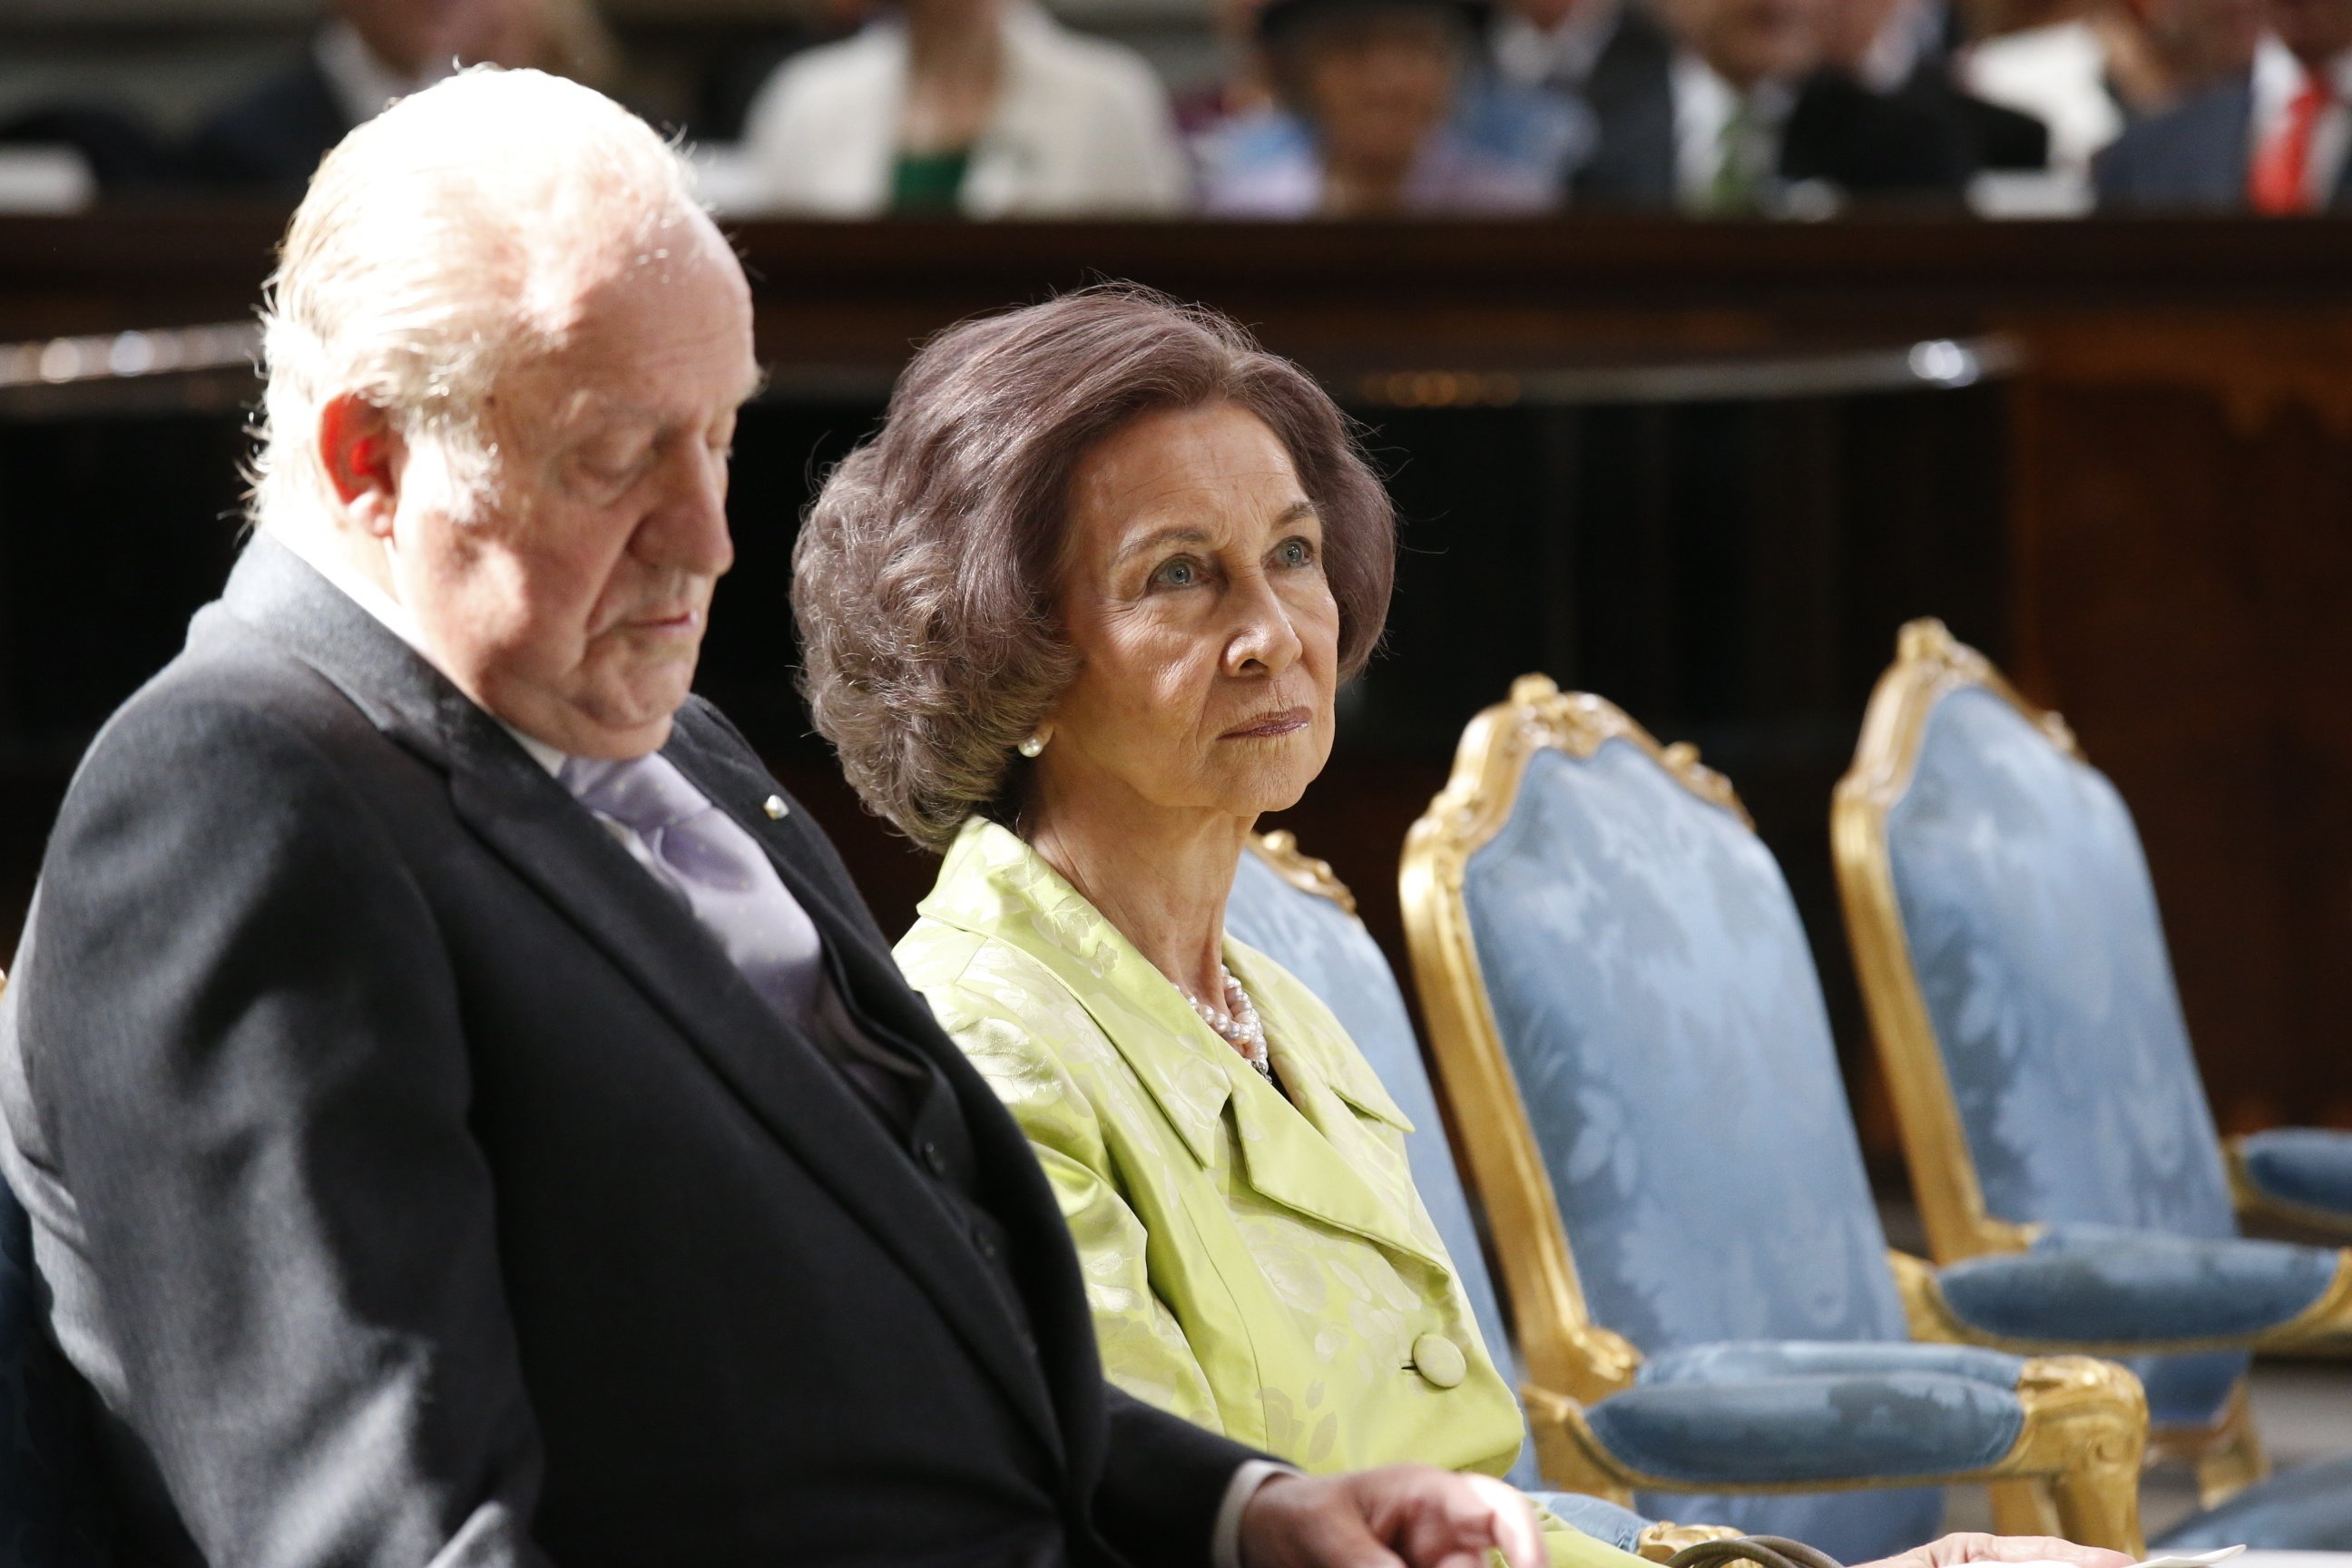 Peñafiel: “La reina Sofia ha fracassat com a muller, mare i dona”